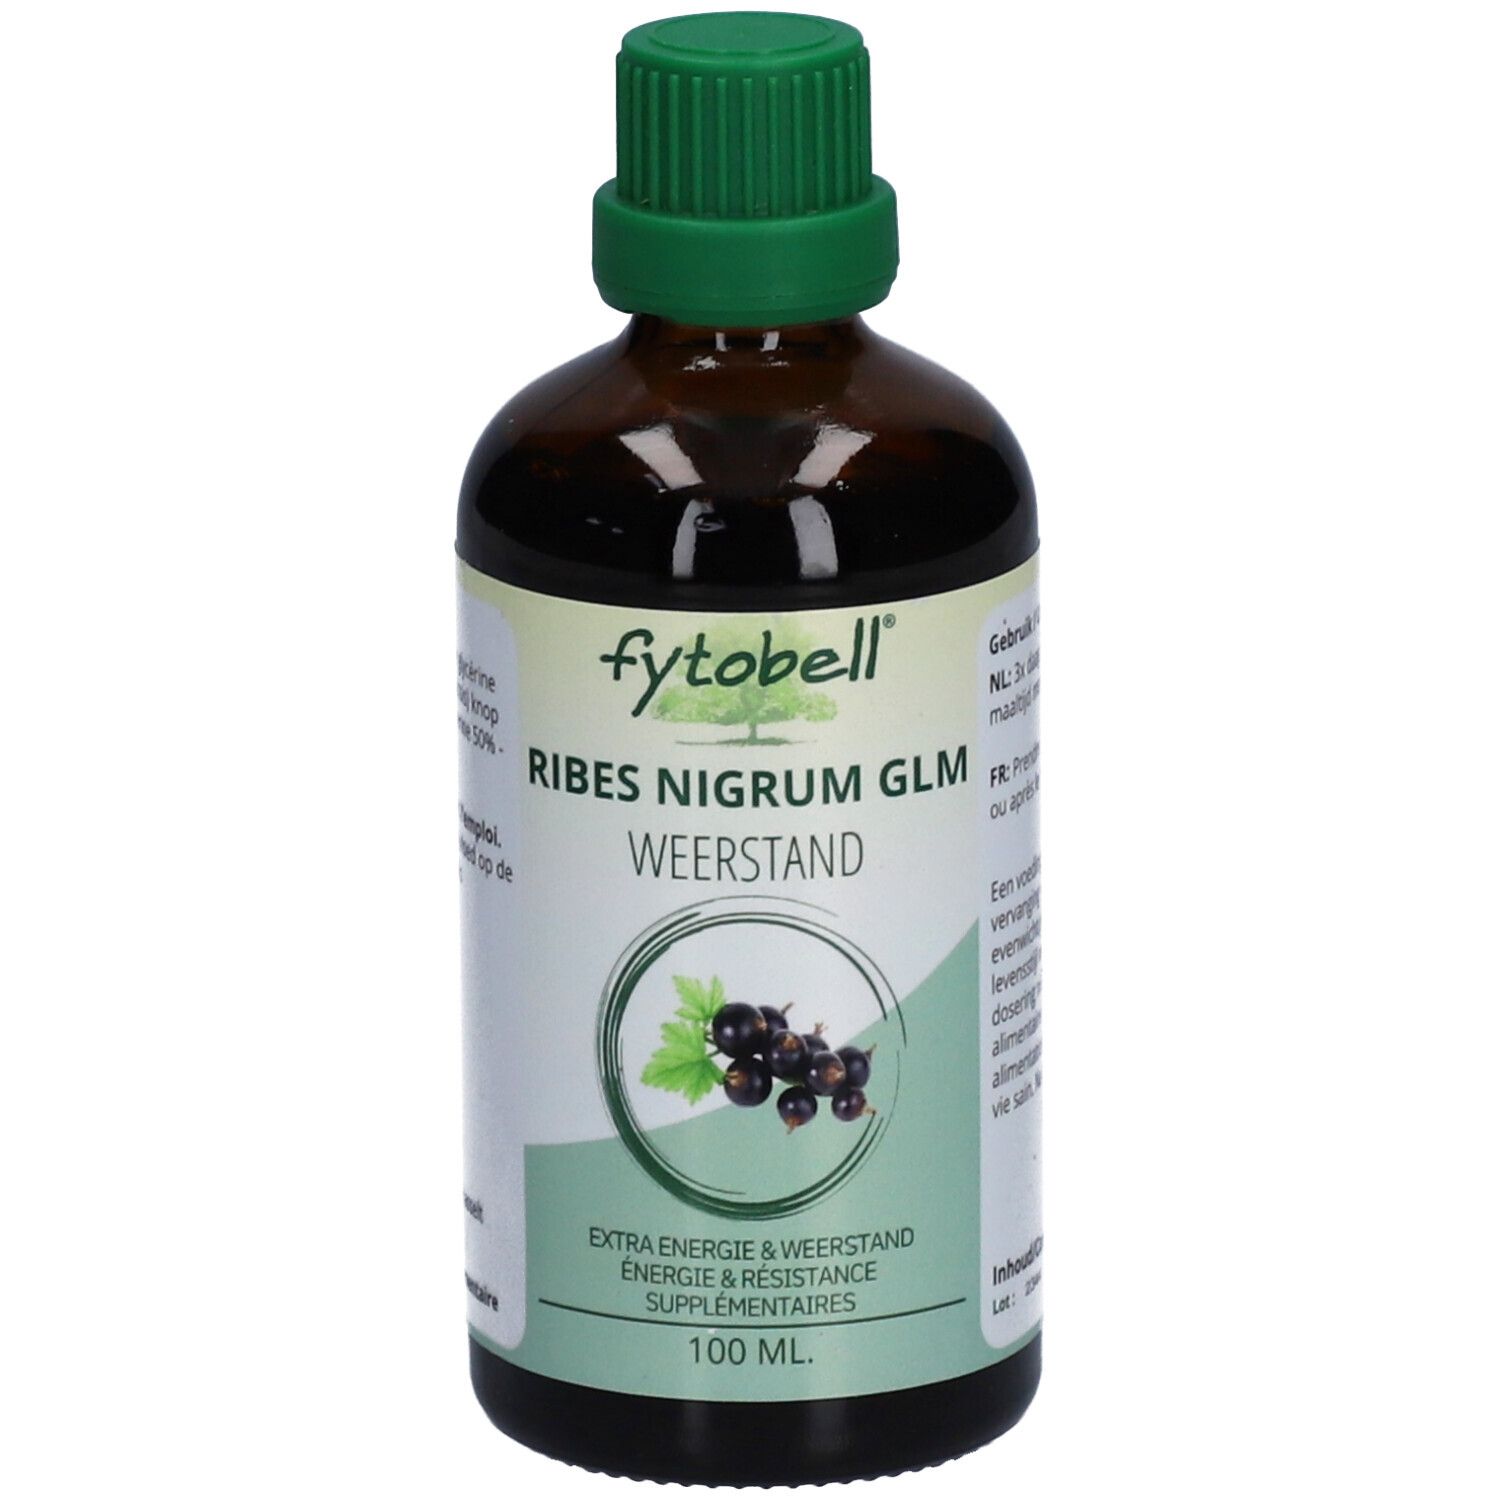 Image of Fytobell Ribes Nigrum GLM